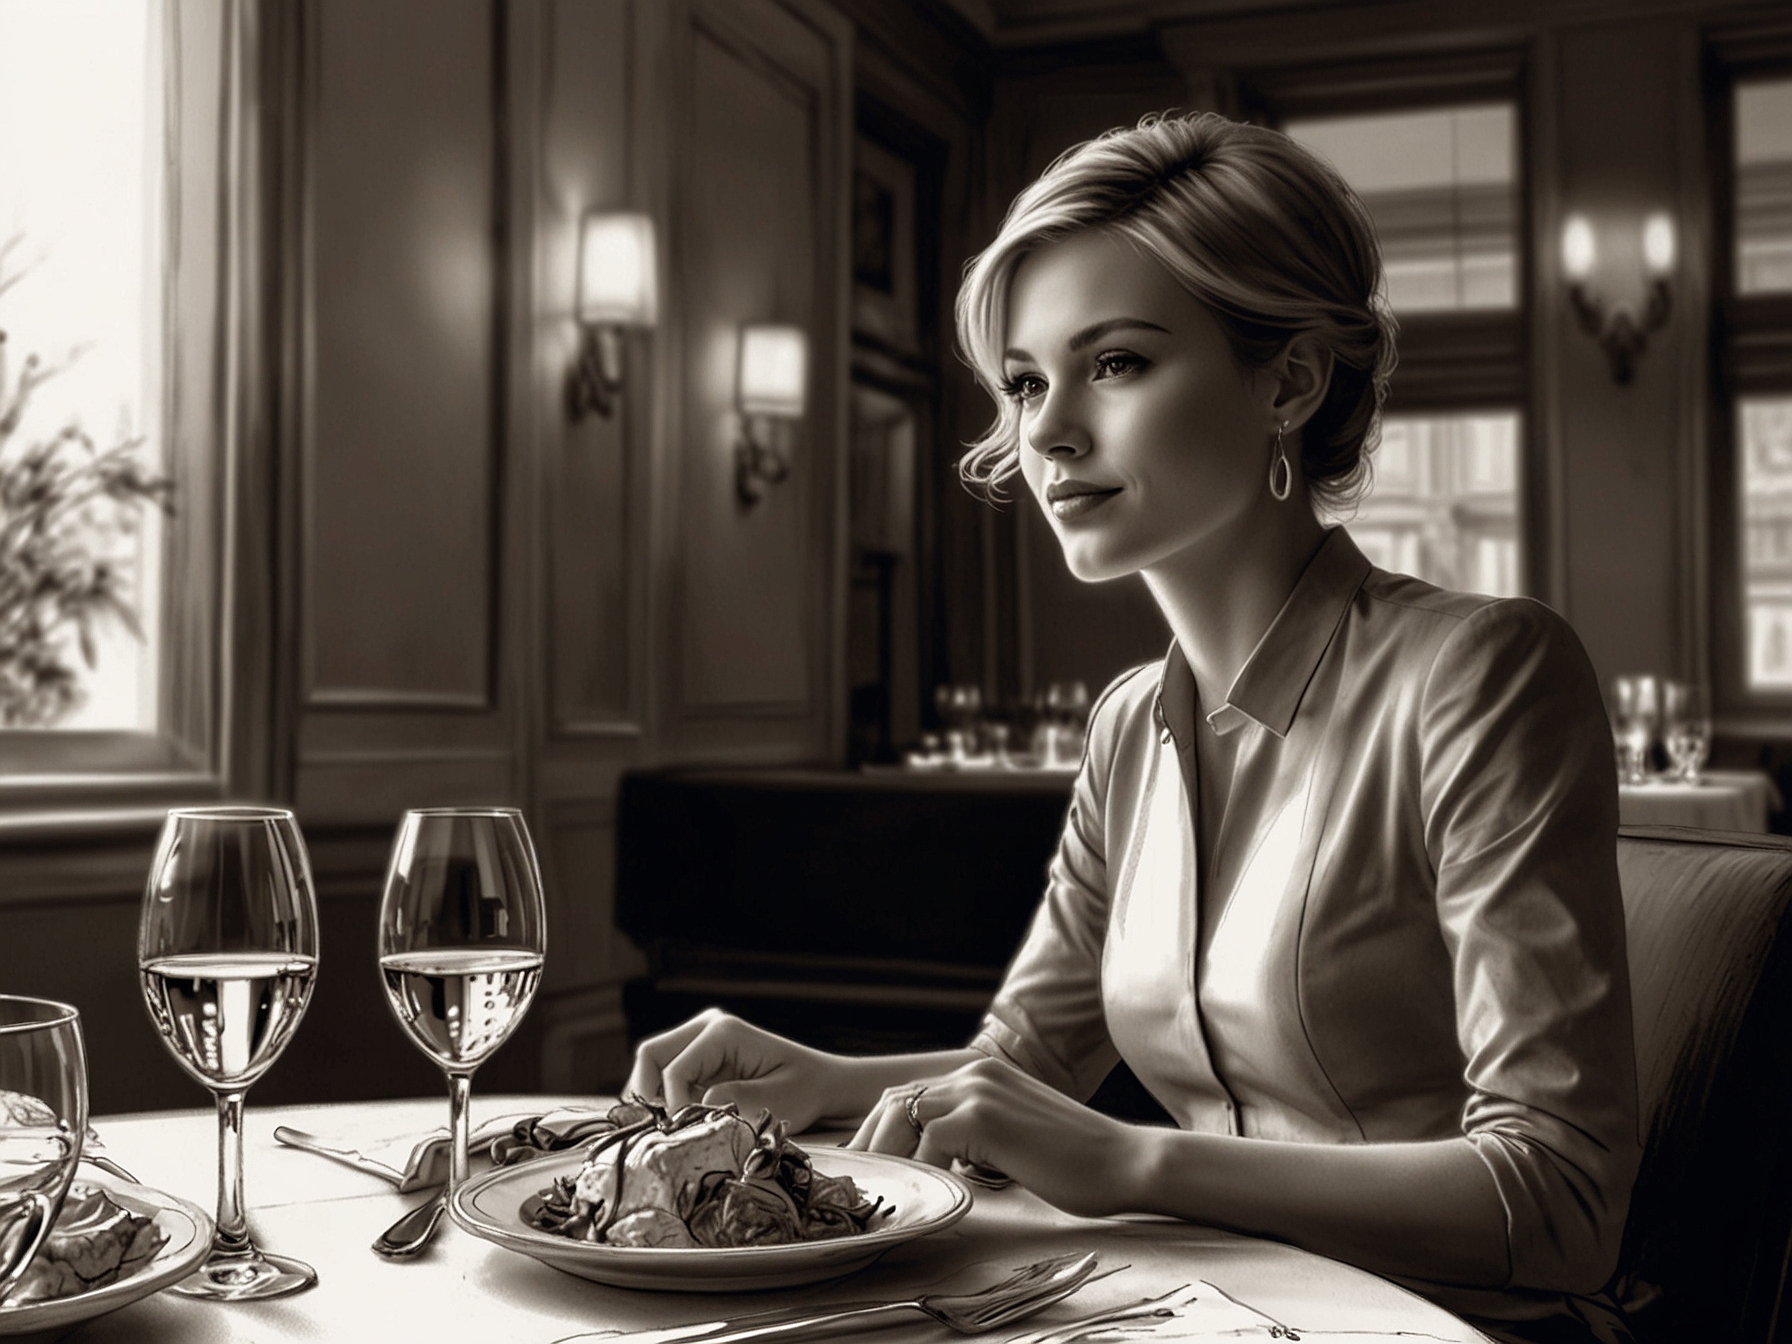 A wealthy individual enjoying a lavish meal at a high-end restaurant.